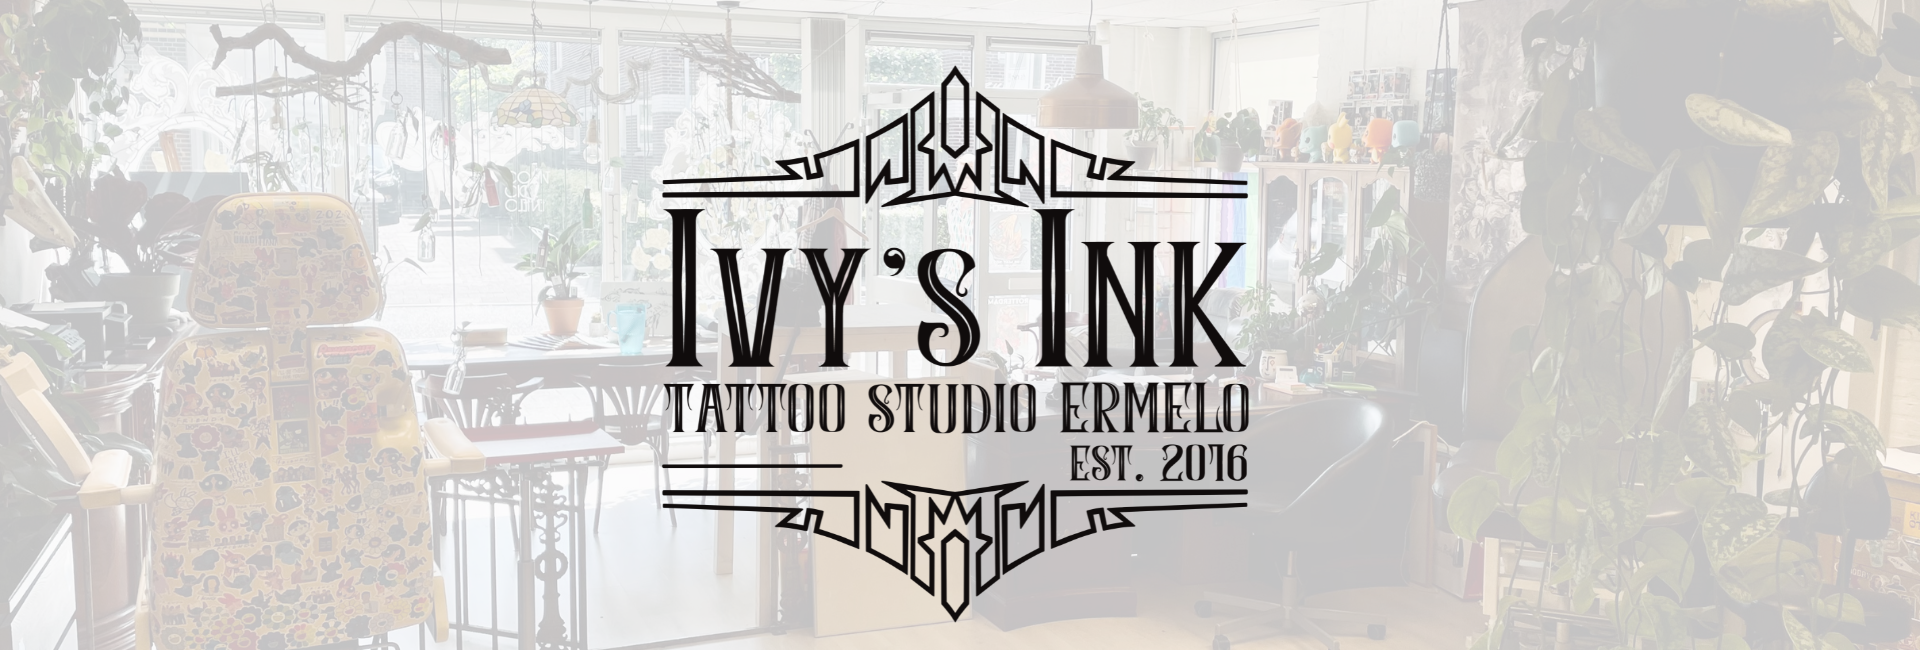 Ivy's ink tattooshop Ermelo